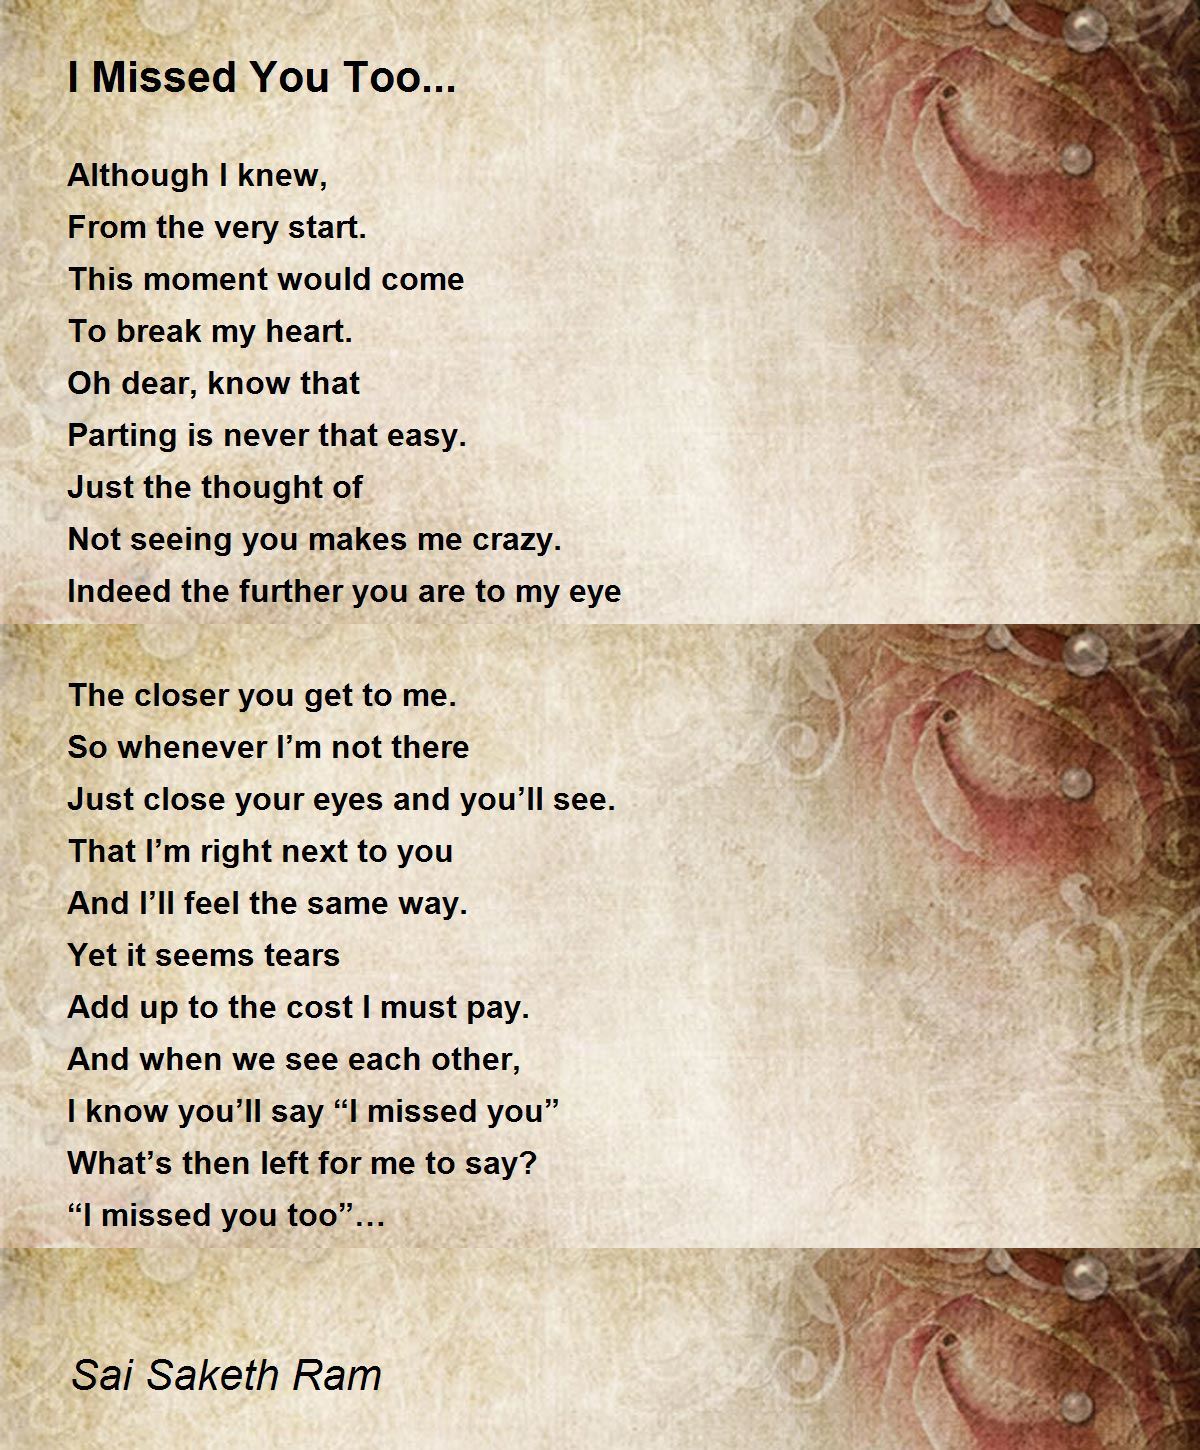 I Missed You Too... - I Missed You Too... Poem by Sai Saketh Ram